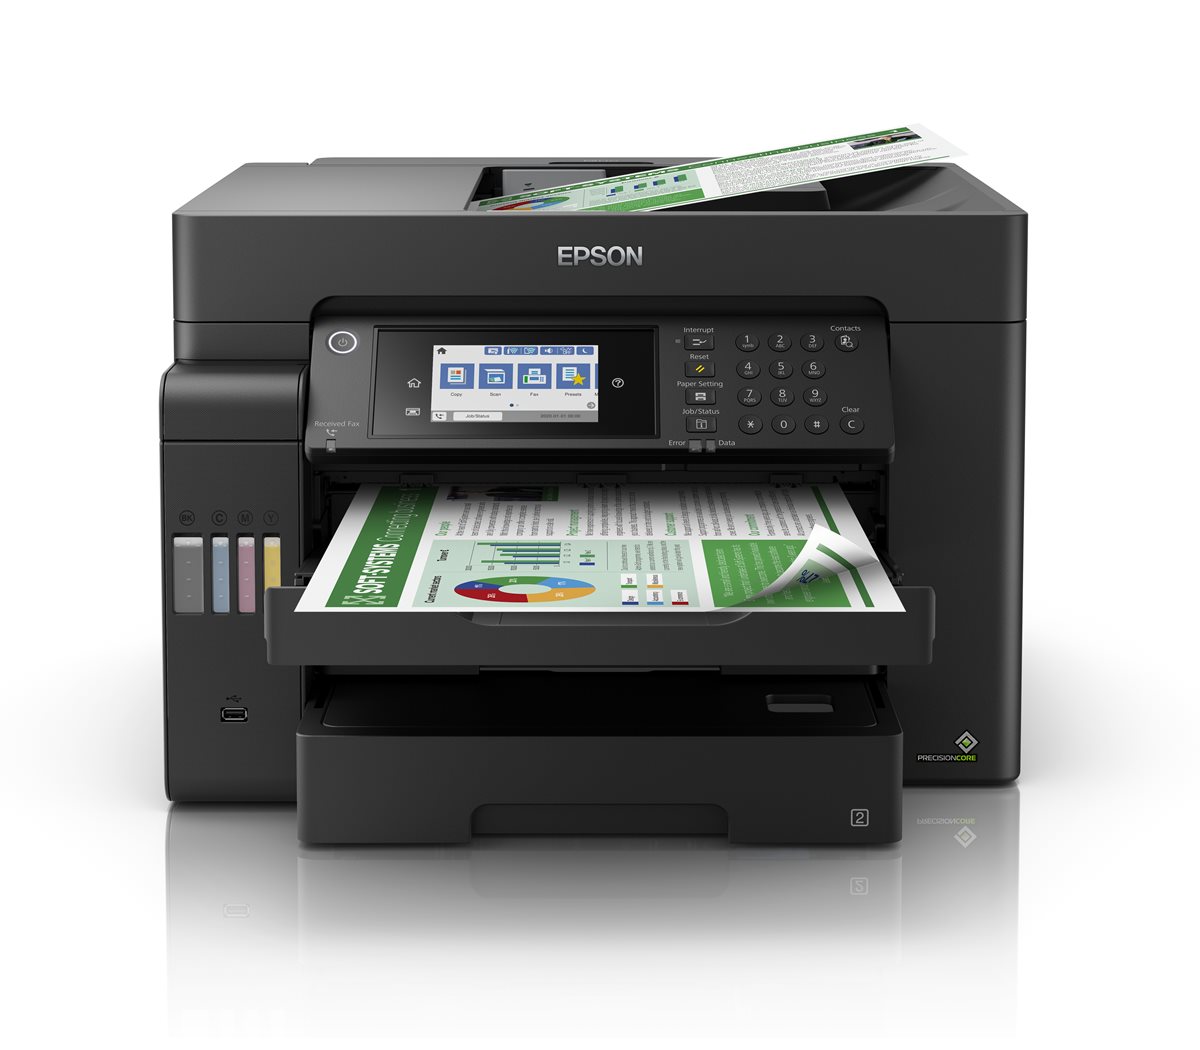 Impresora Multifuncion HP 516w c/sistema Contínuo. Impresora Multifunción  Impresión